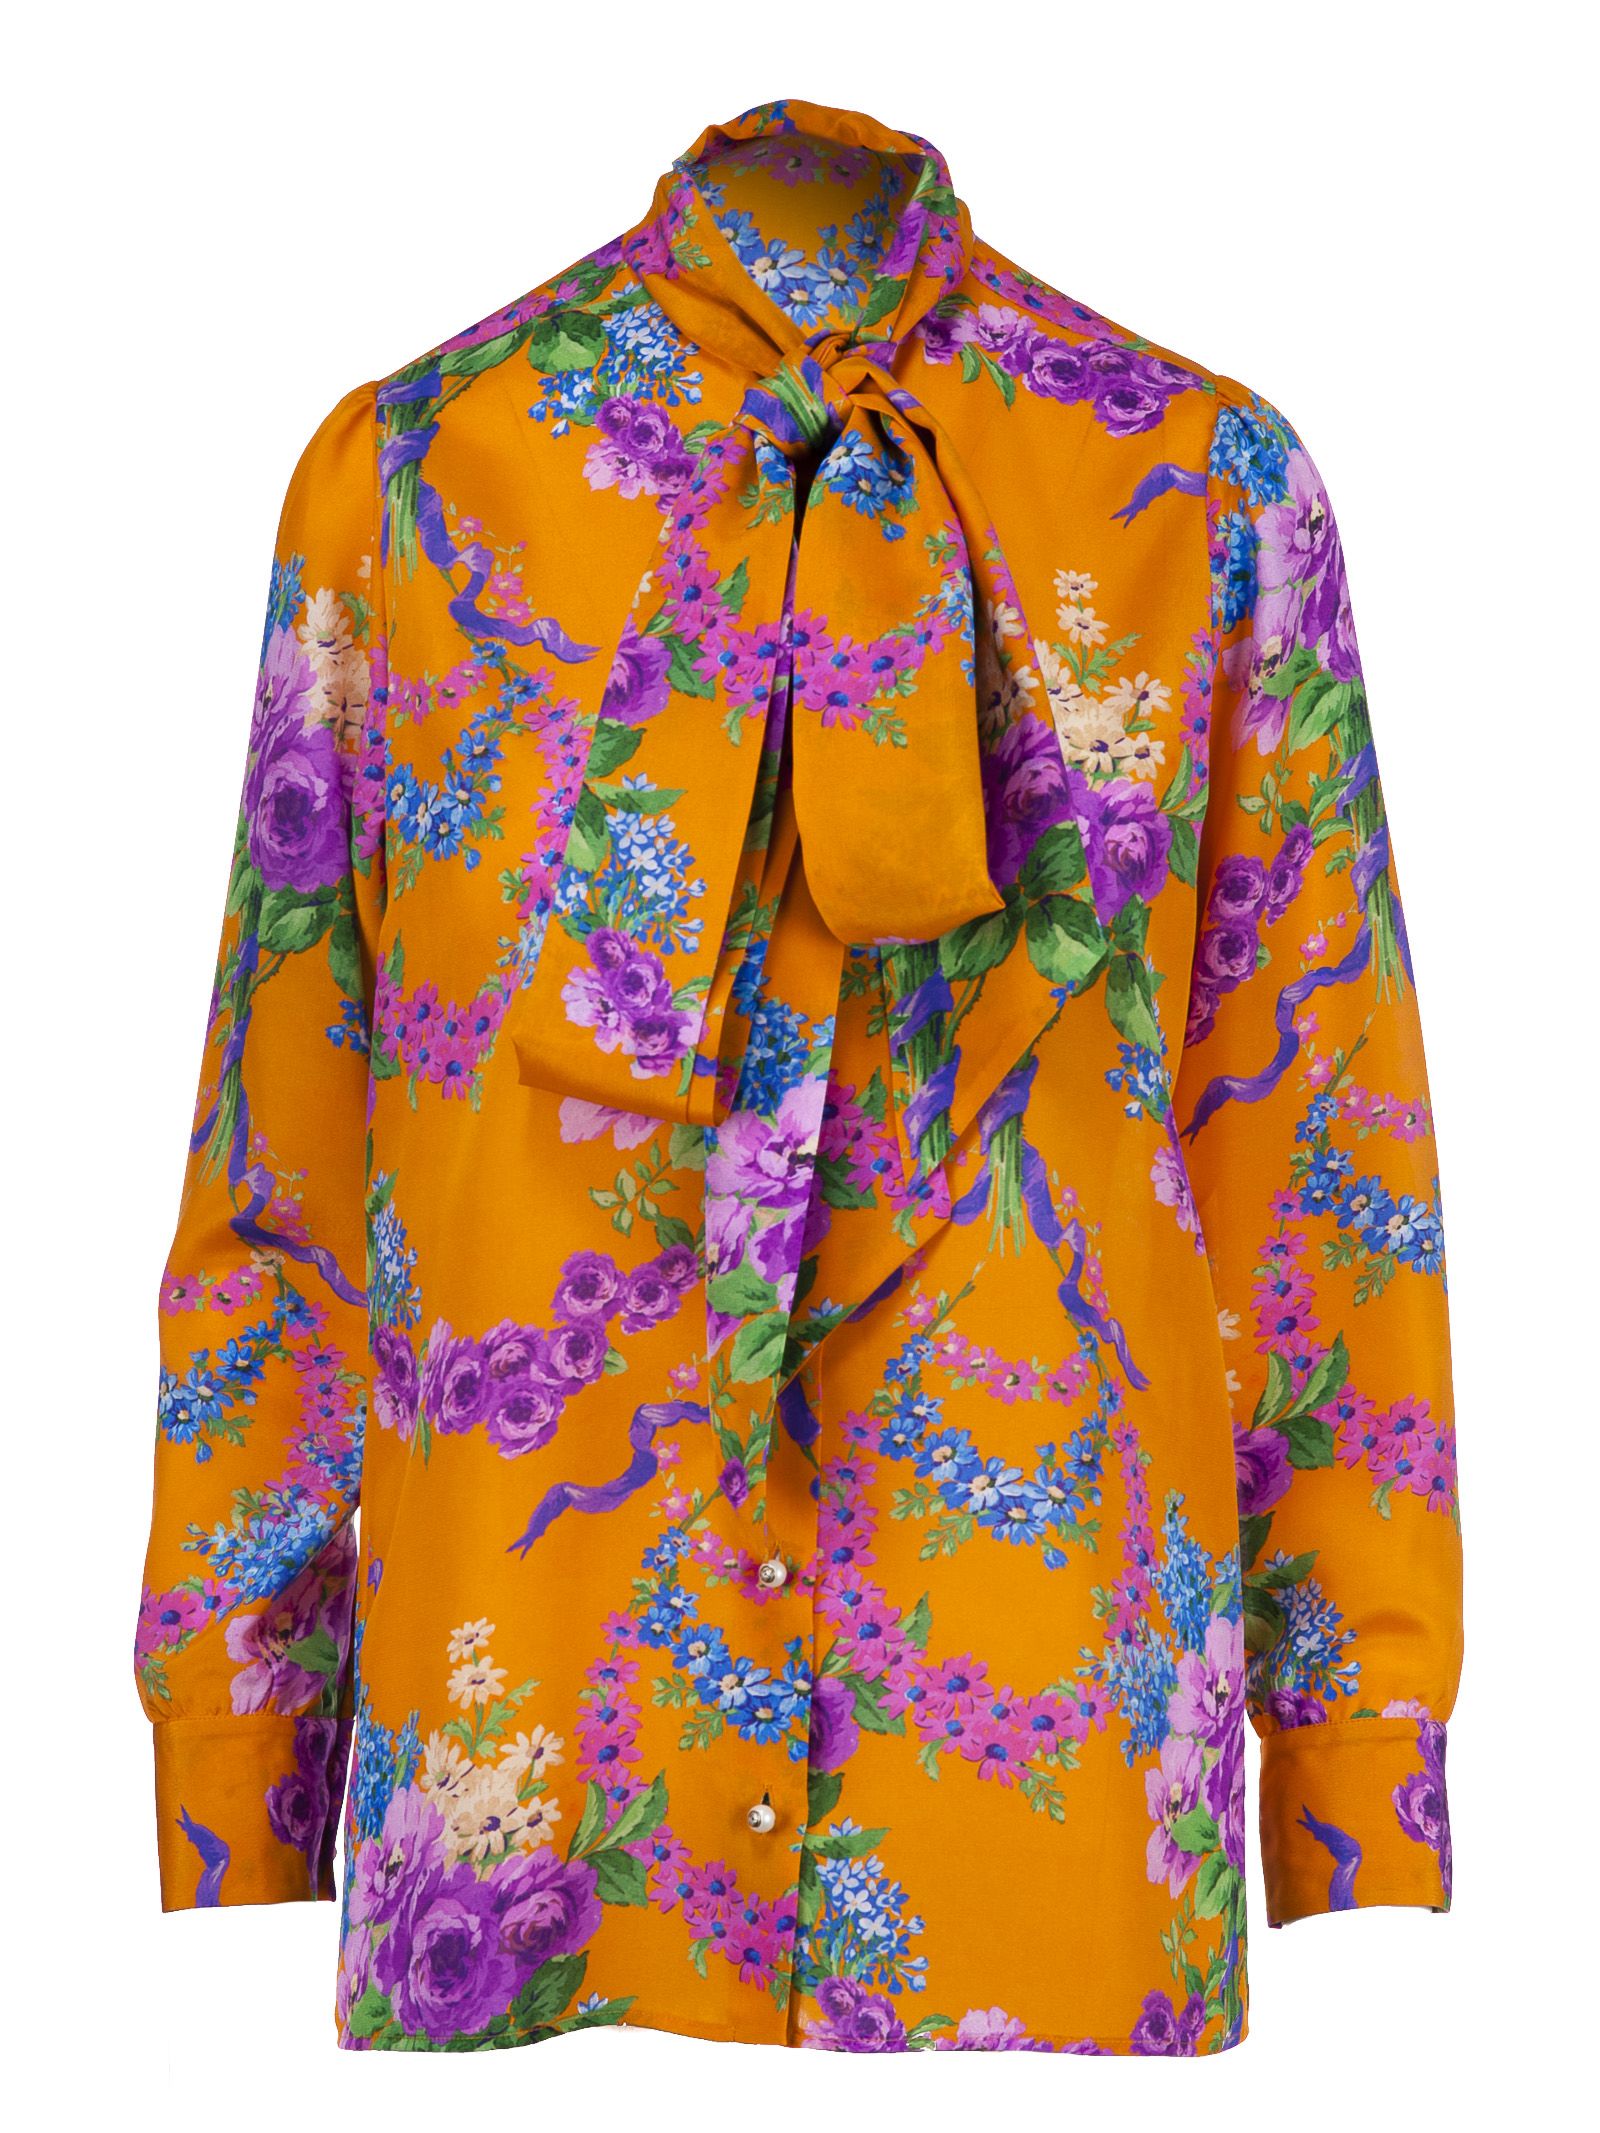 Gucci - Gucci Floral Print Blouse - Multicolour, Women's Bluse | Italist